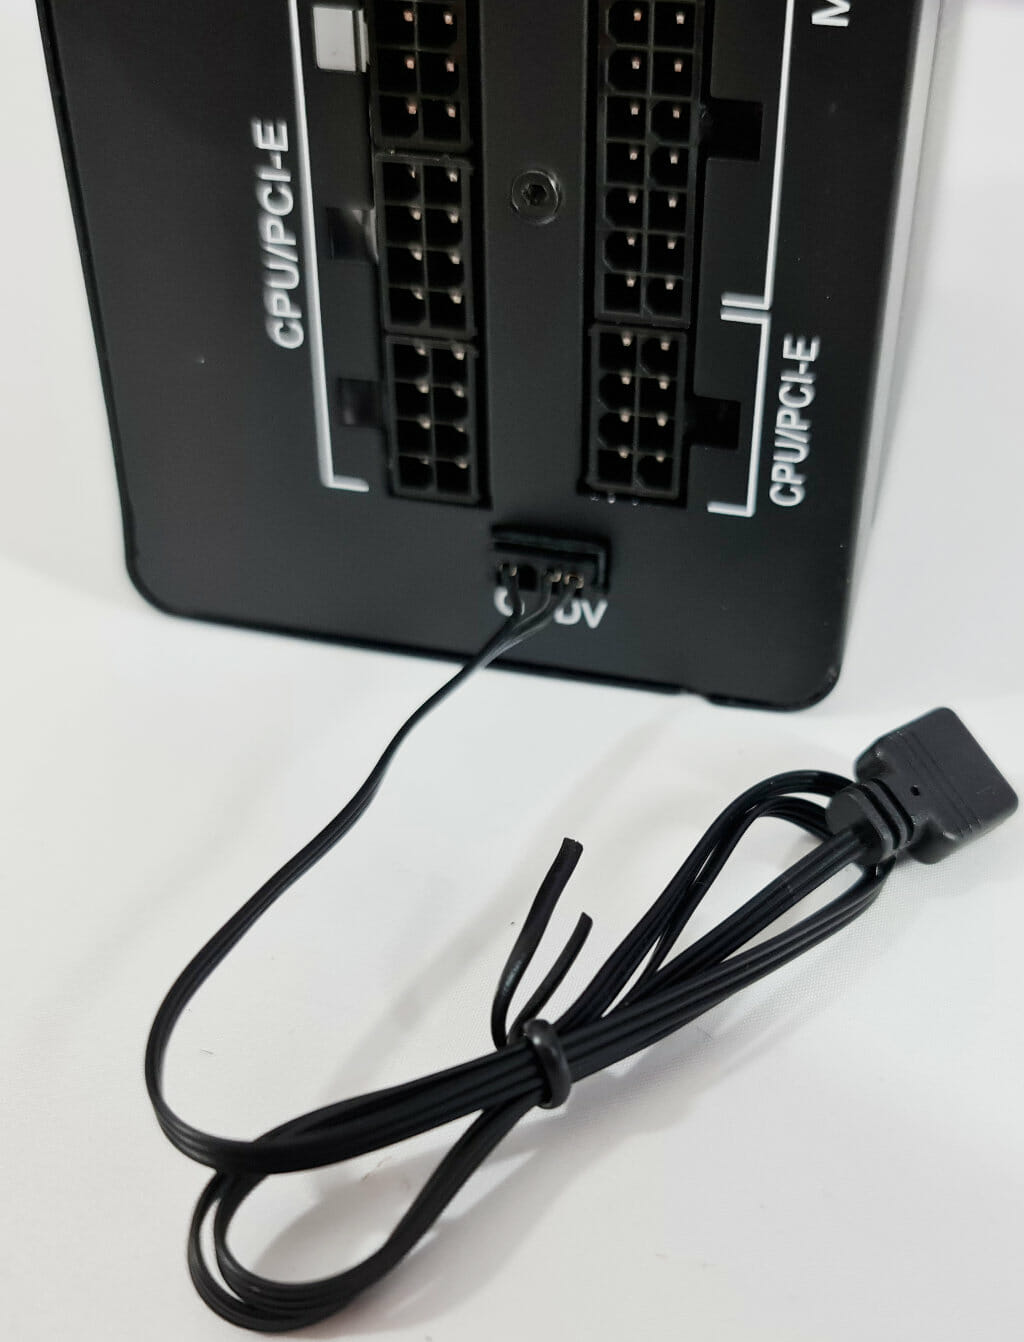 PCCOOLER GI P 650W 7D RGB PSU REVIEW rgb cable